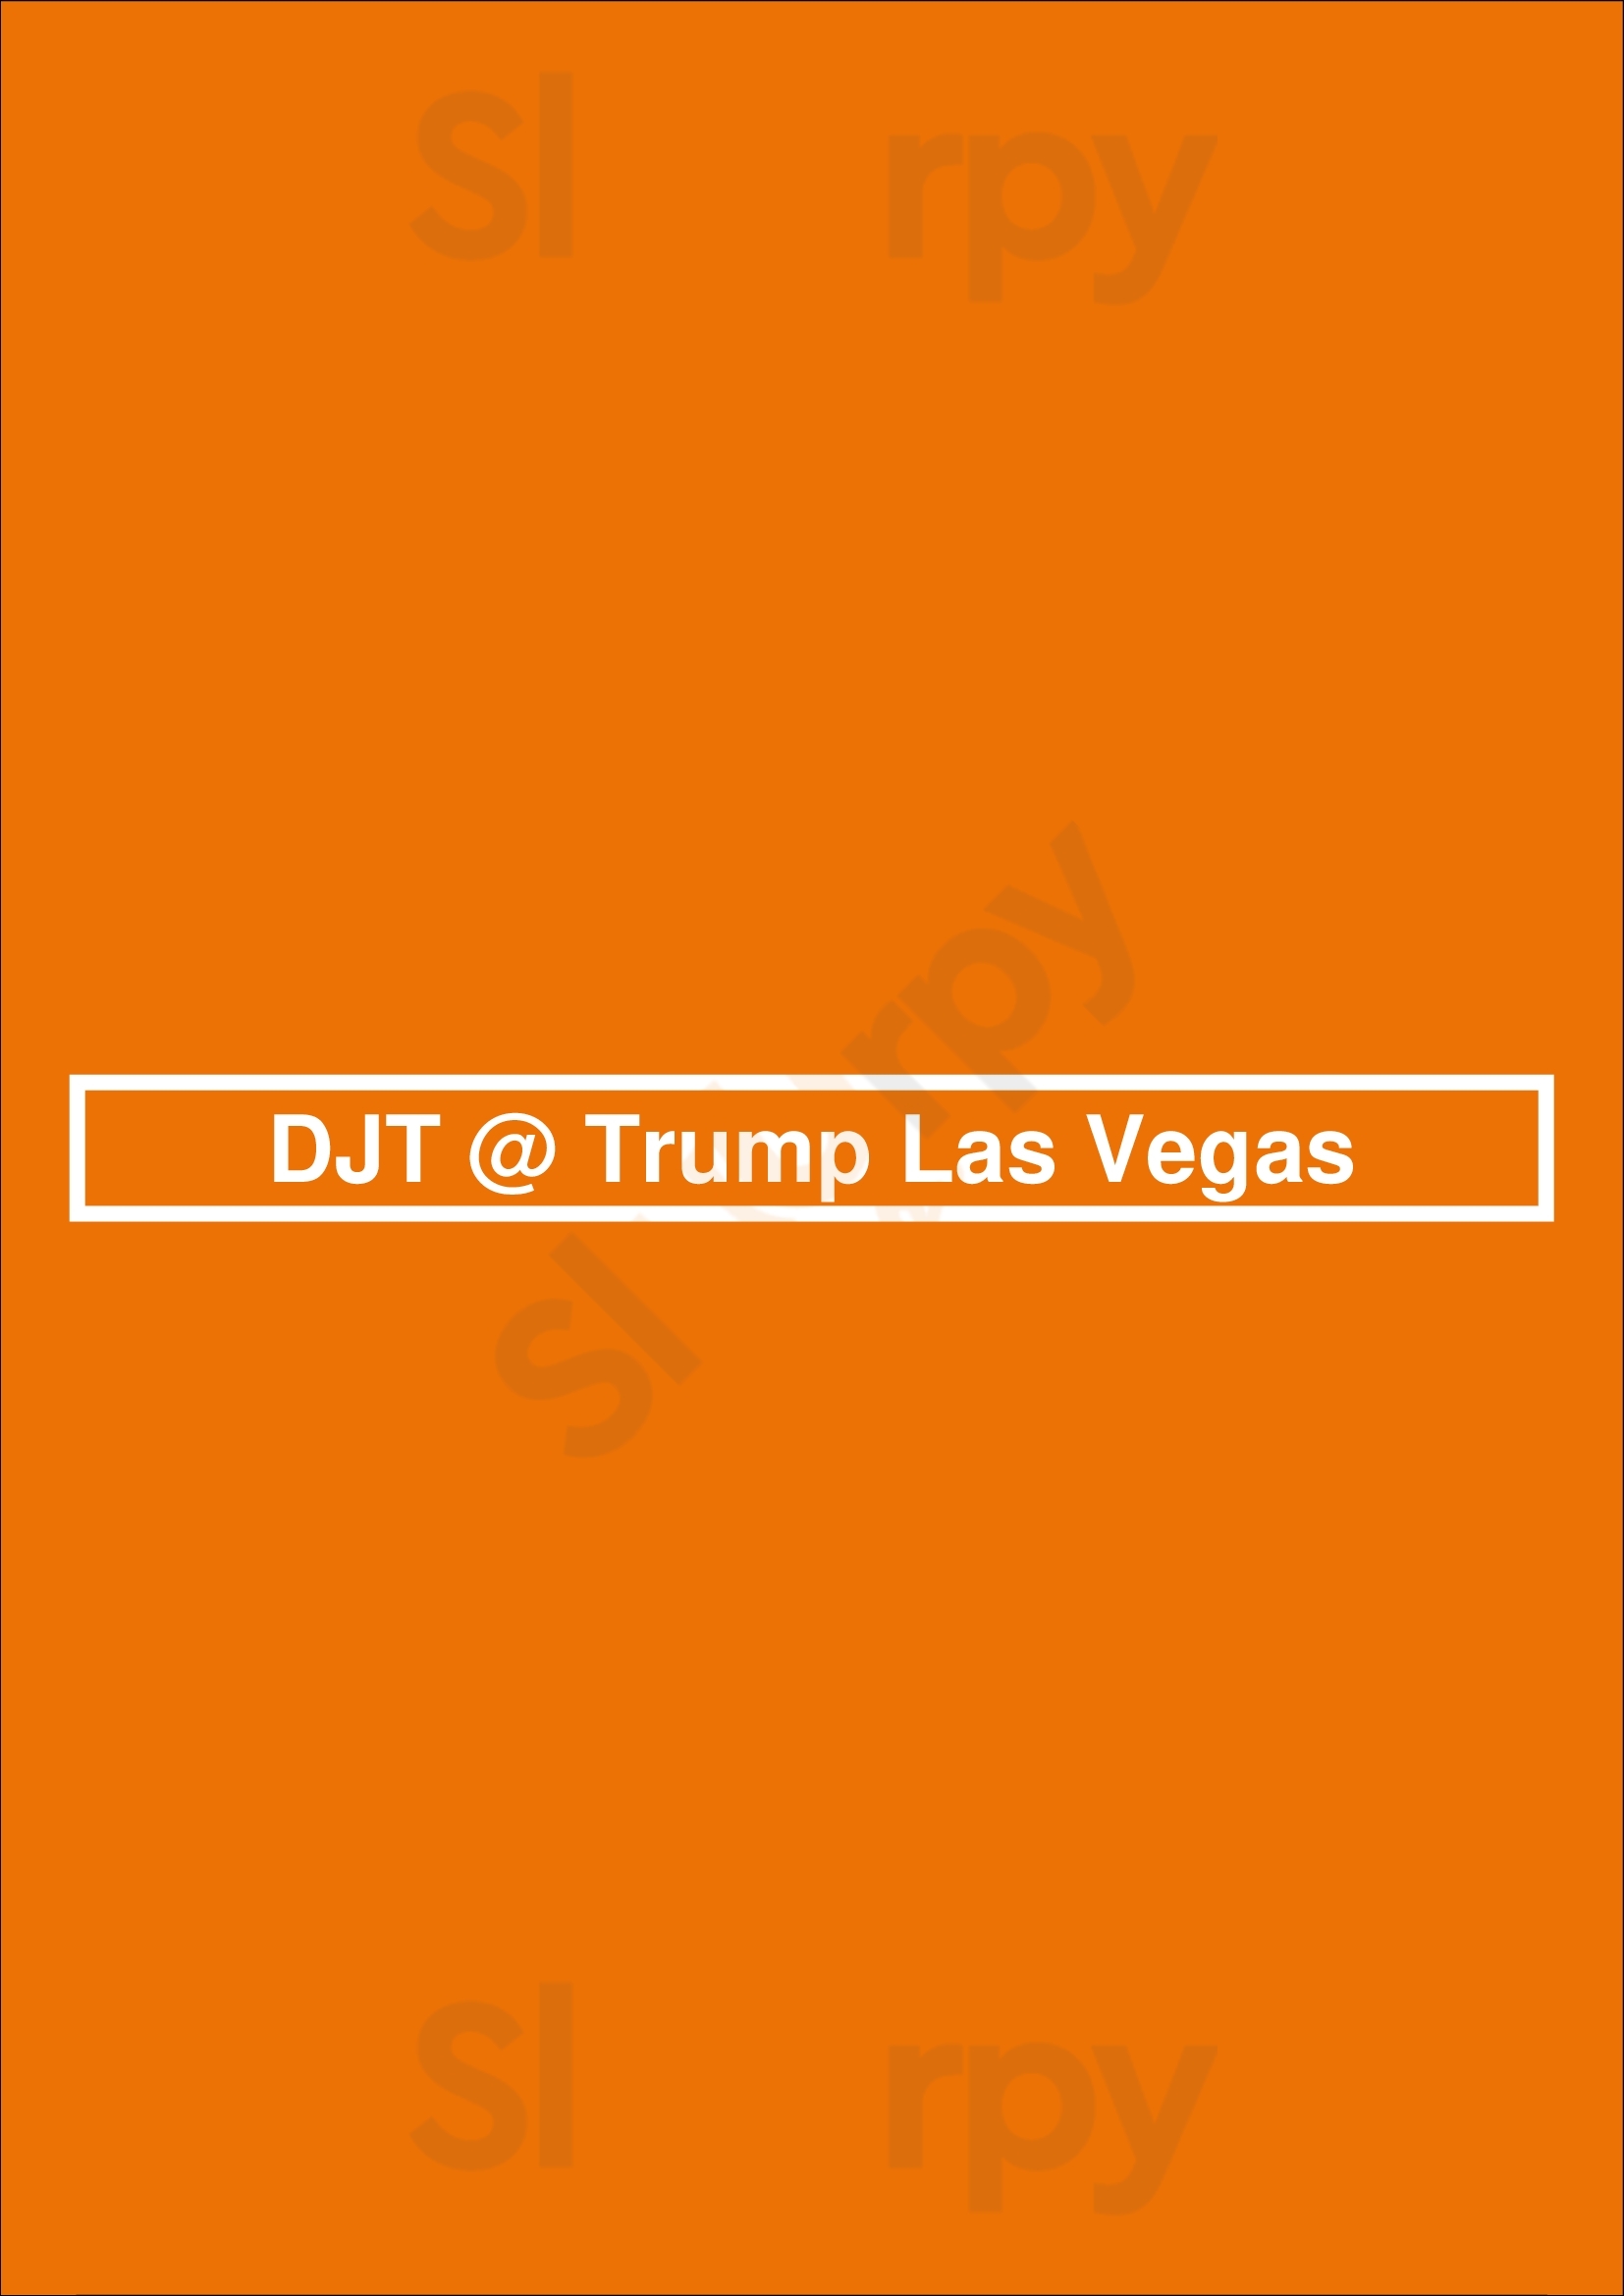 Djt @ Trump Las Vegas Las Vegas Menu - 1